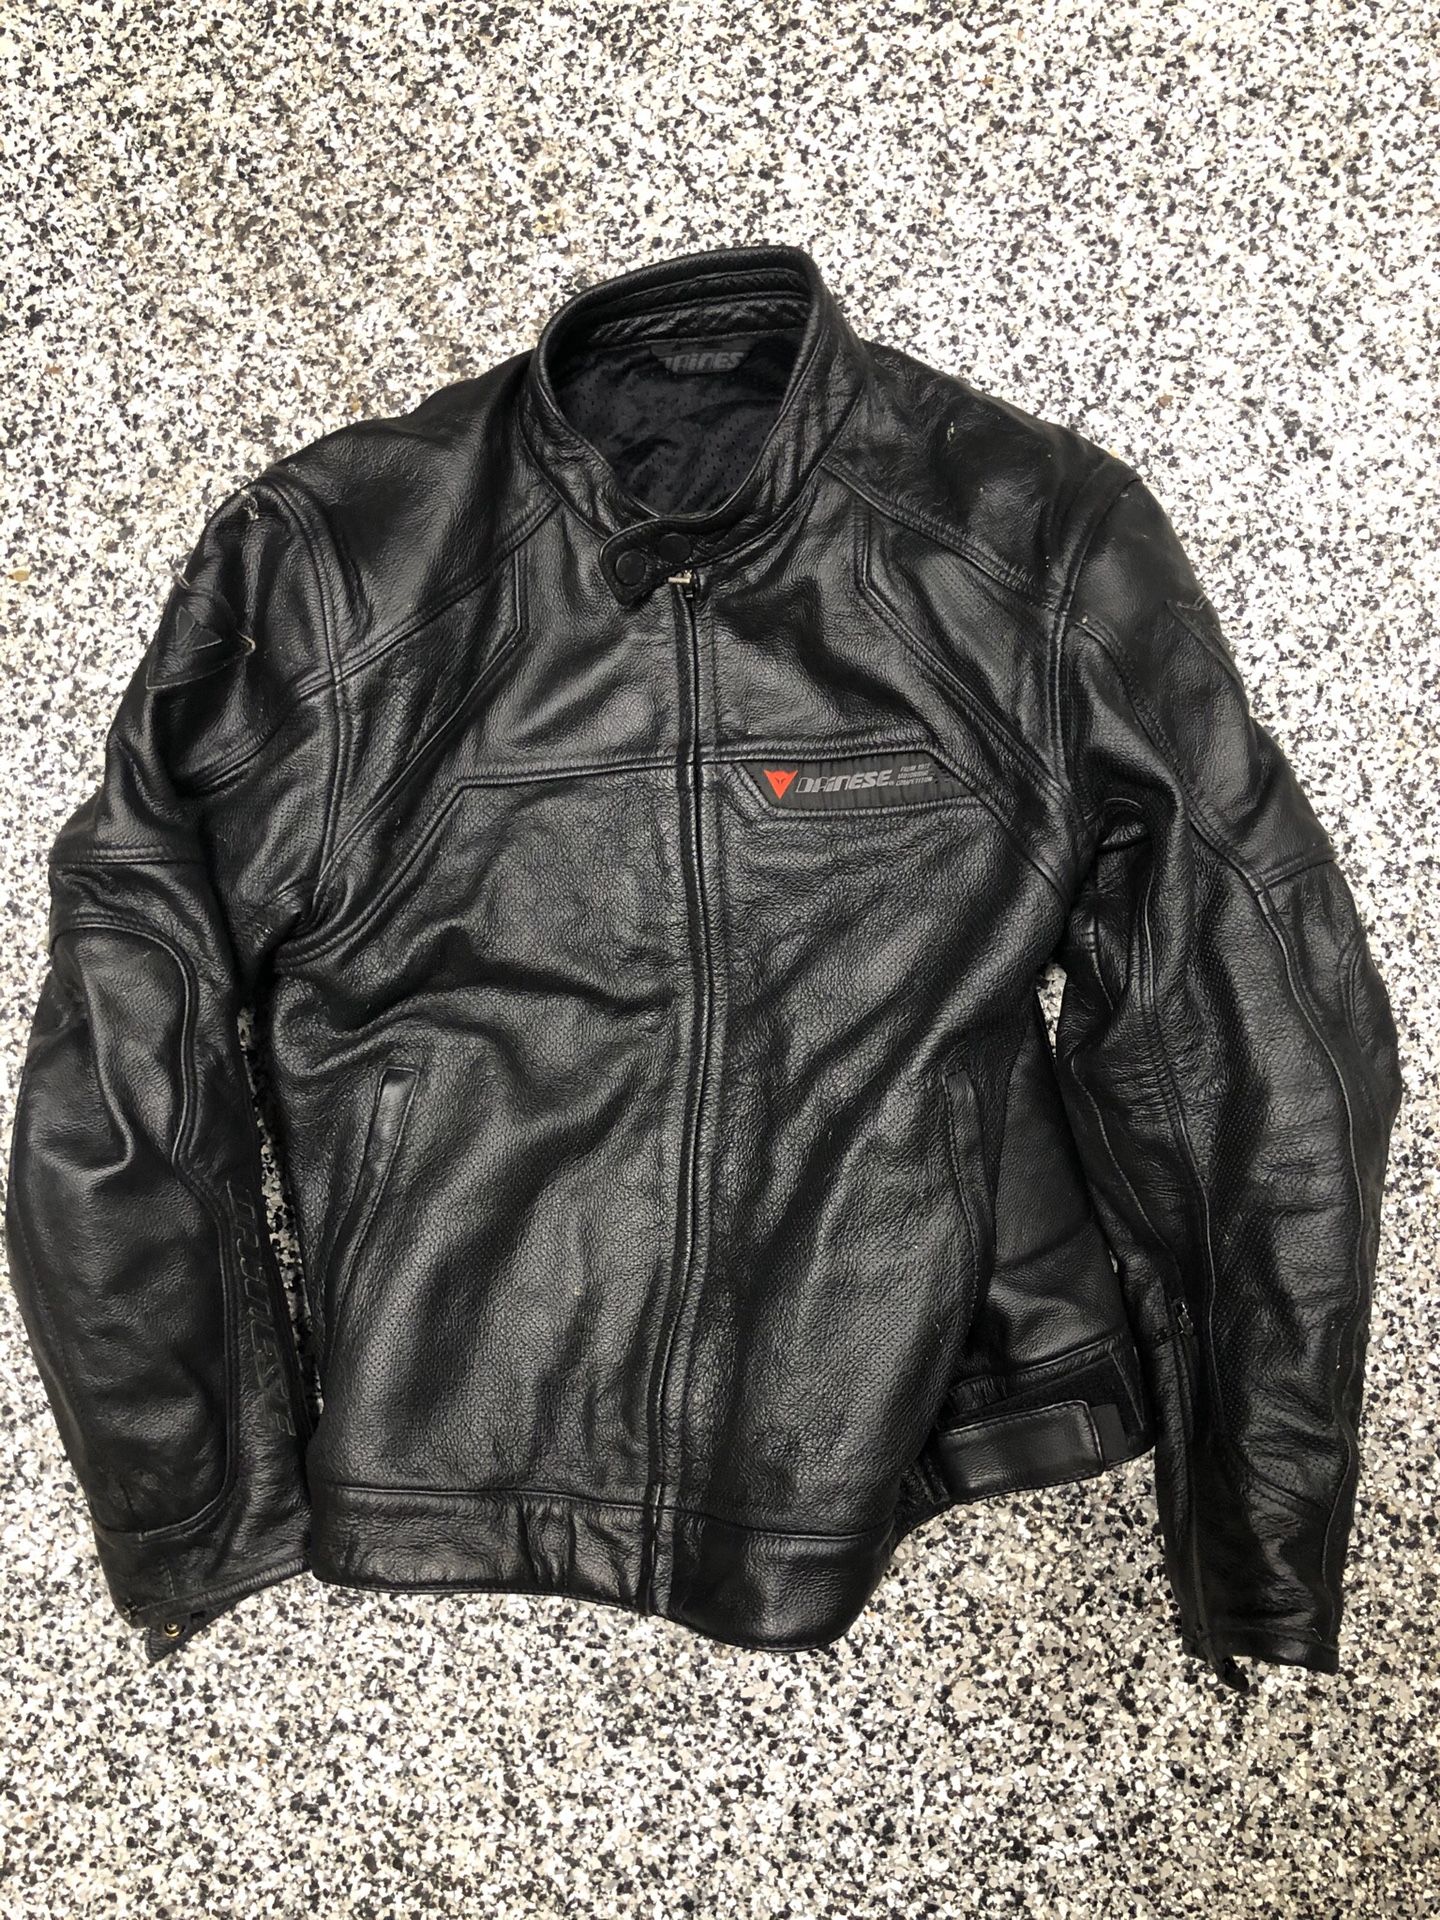 Dainese Perforated Leather Motorcycle Jacket Large